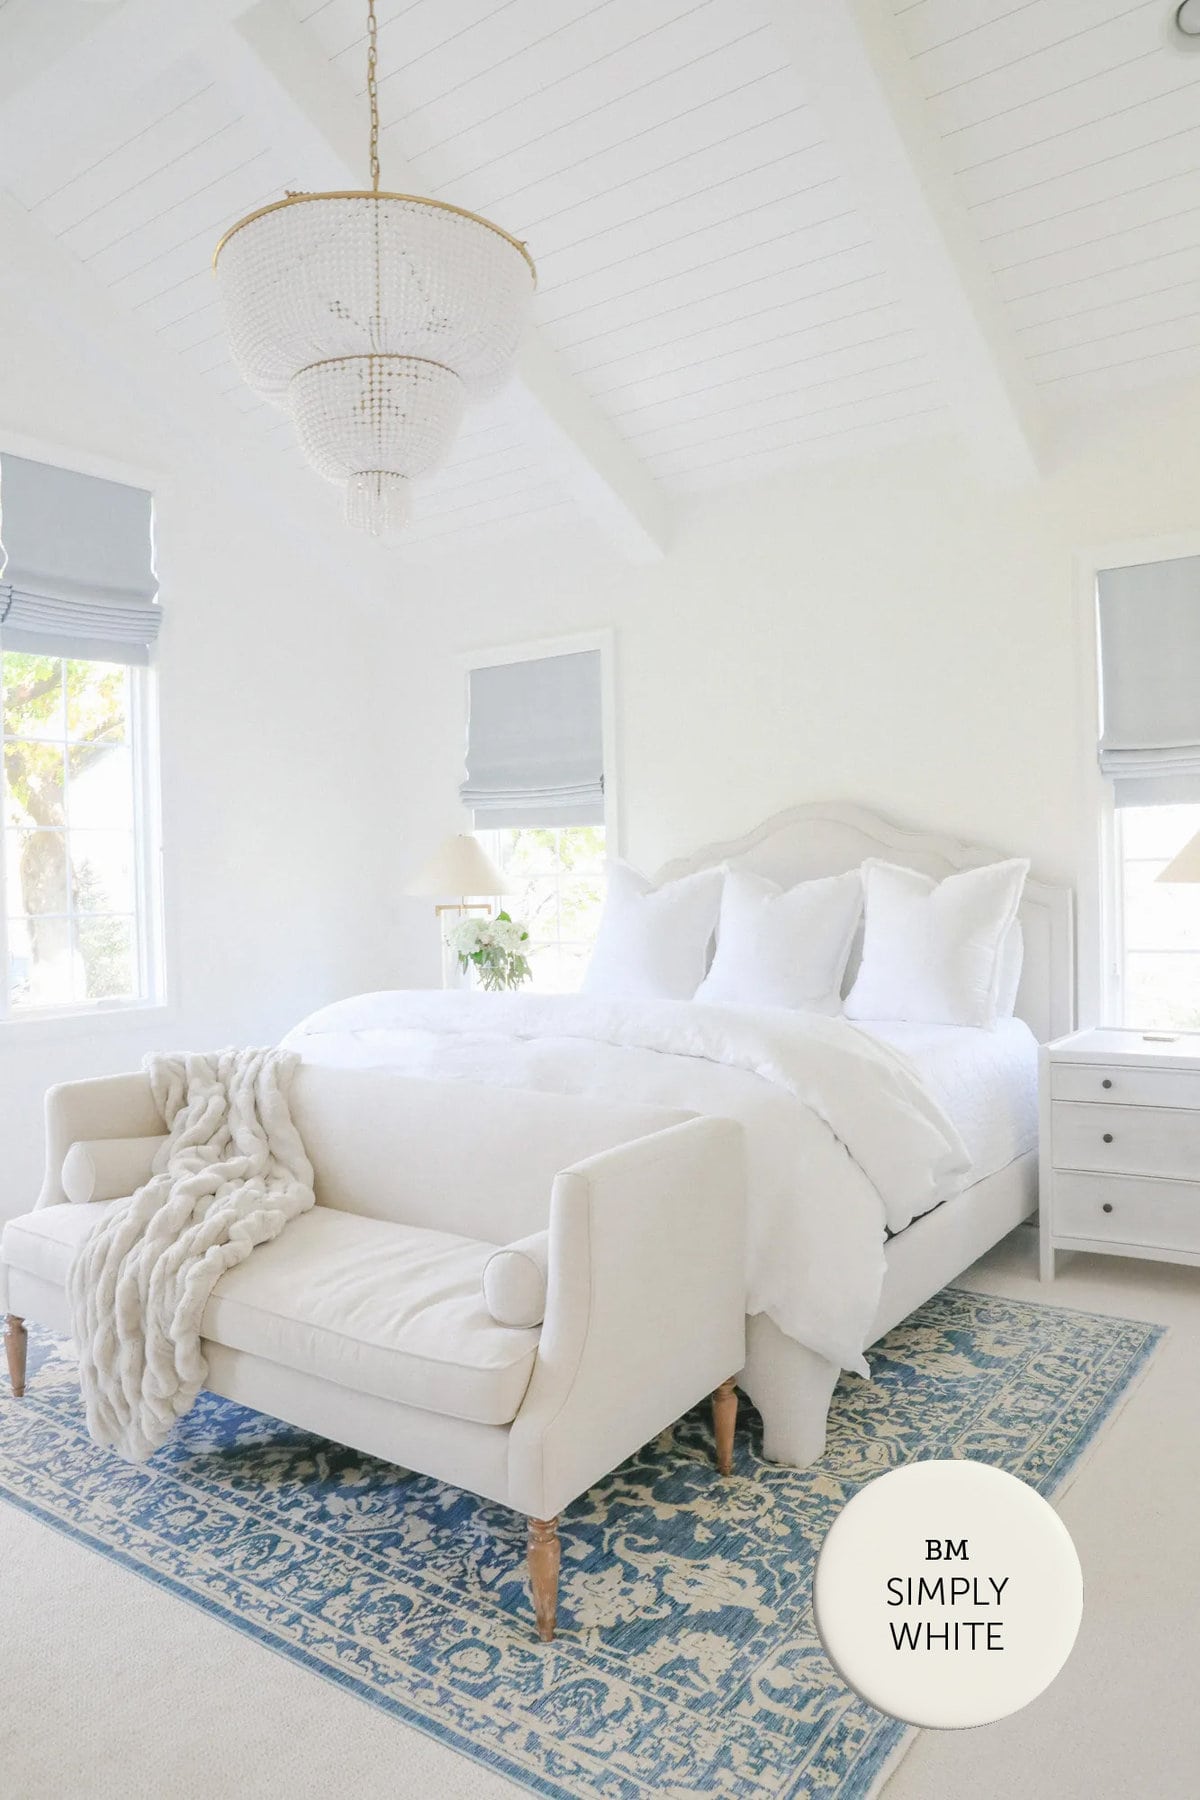 benjamin moore simply white walls in a bedroom